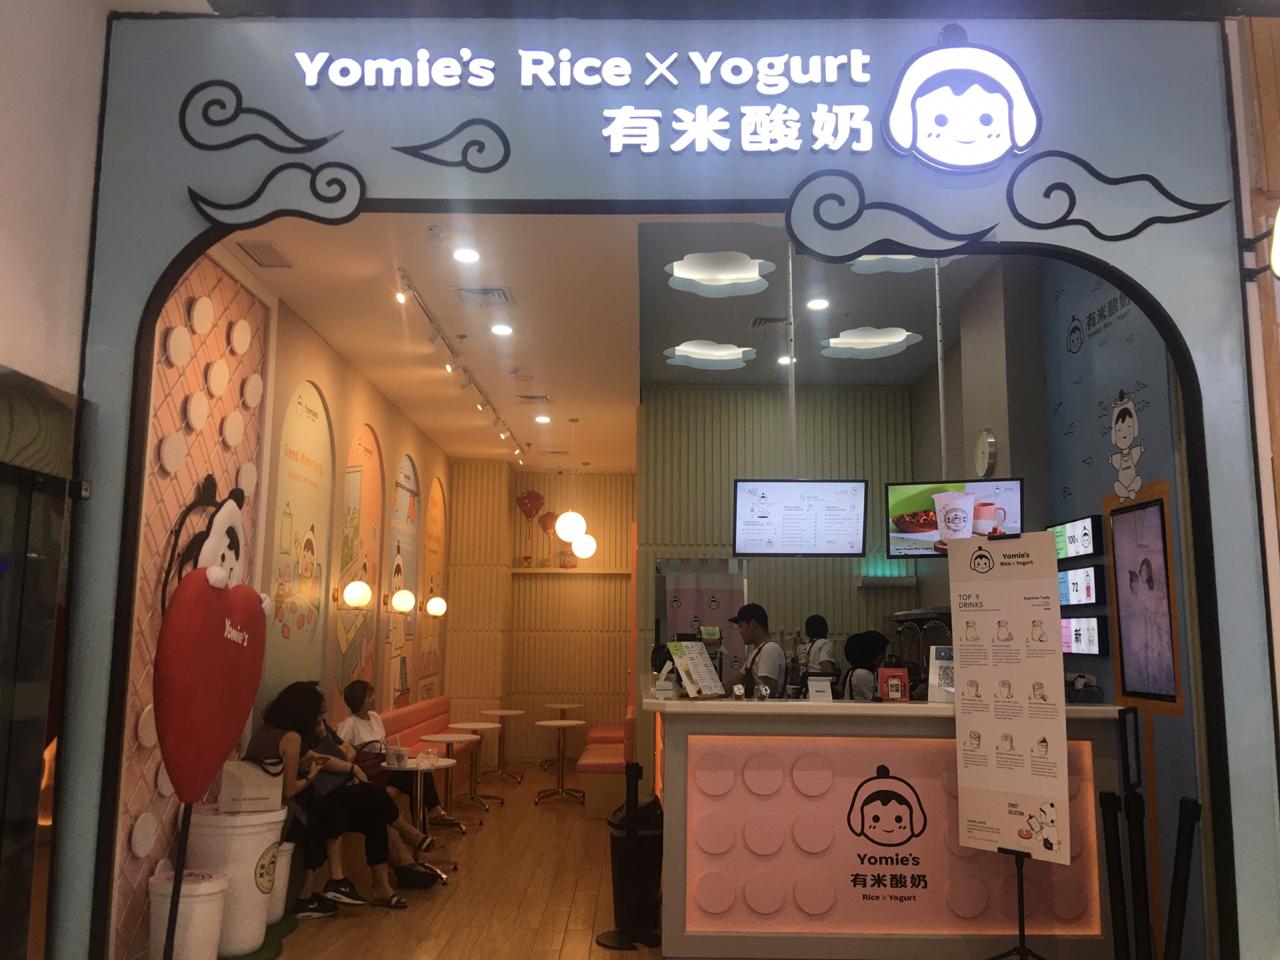 Yomies Rice Yogurt shop front in lippo mall puri st. moritz